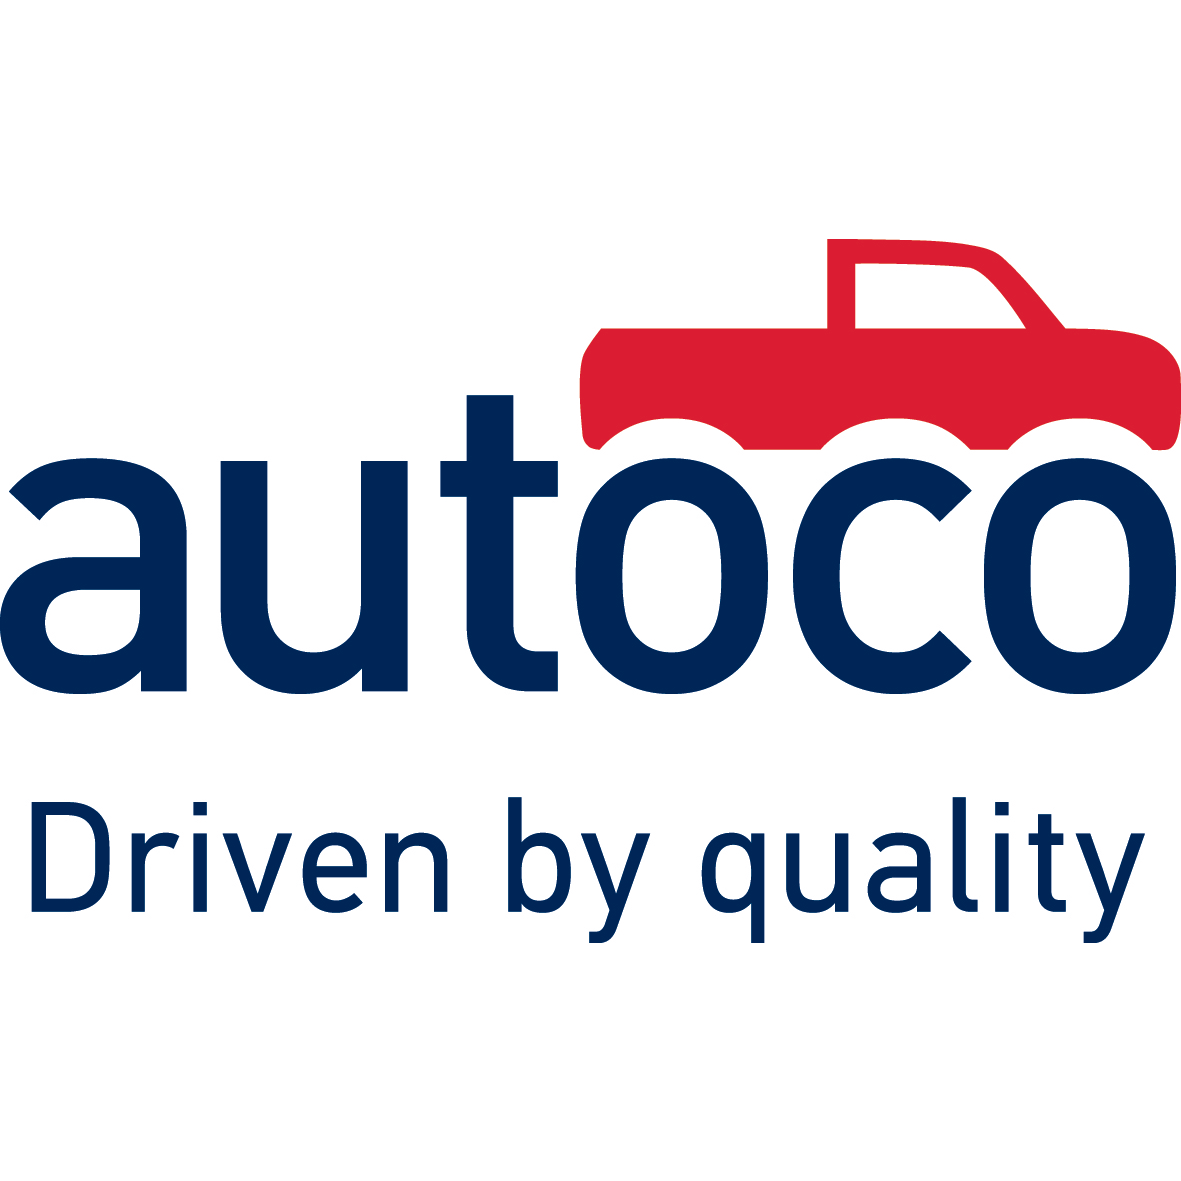 Autoco - Driven by quality Autoco Mechanical & Electrical Tuggeranong Tuggeranong (02) 6189 2401